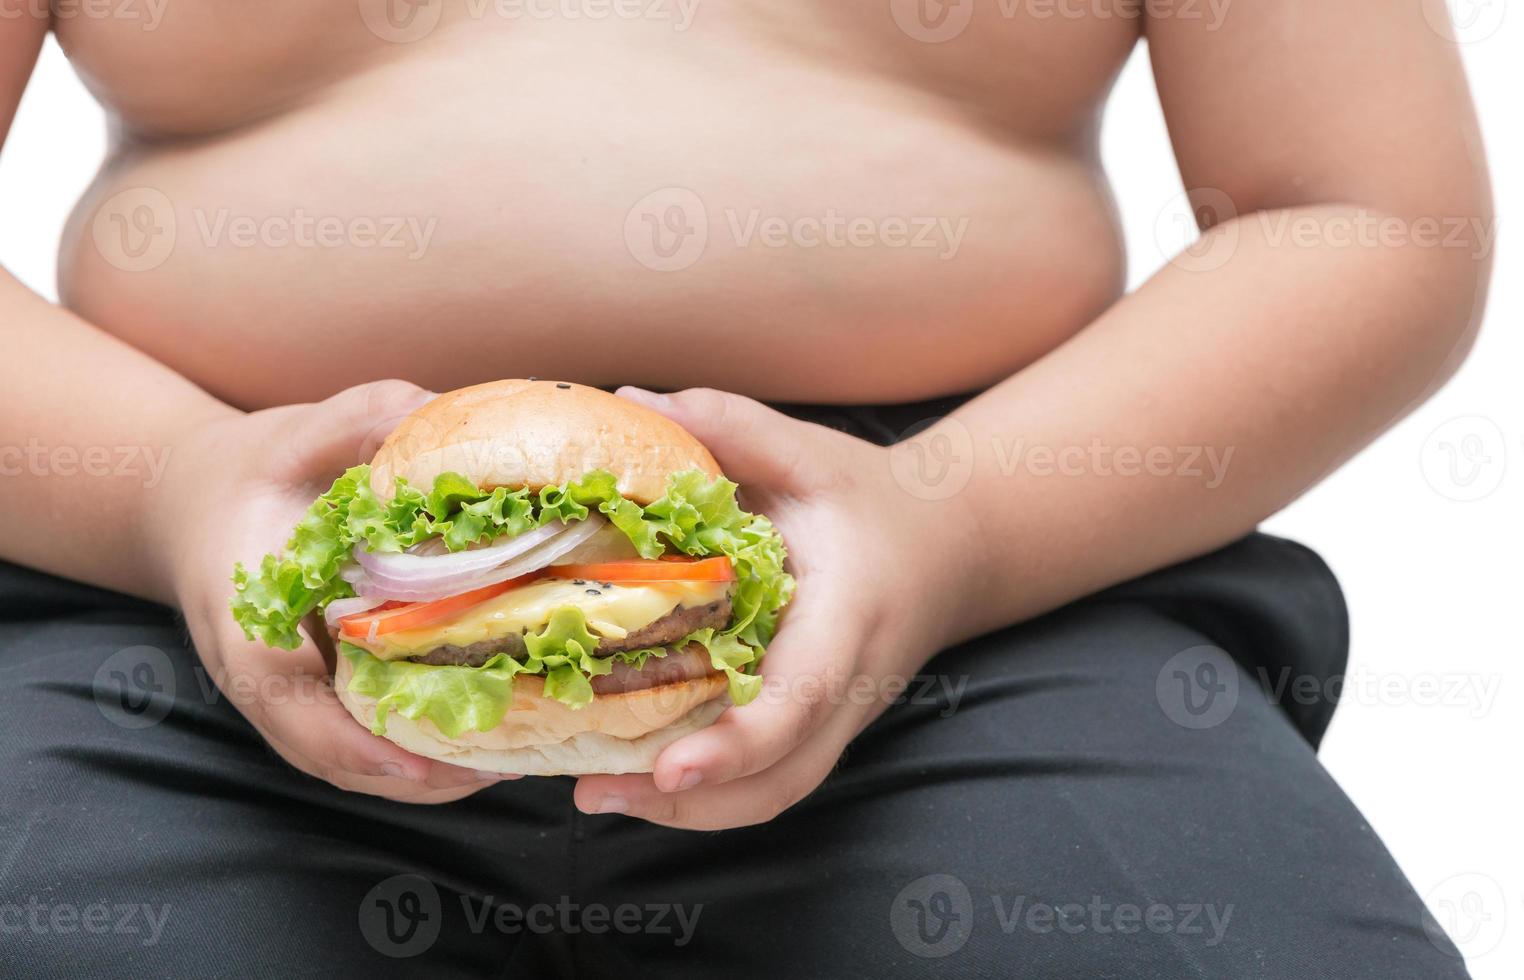 carne de porco queijo Hamburger dentro obeso gordo Garoto mão isolado foto